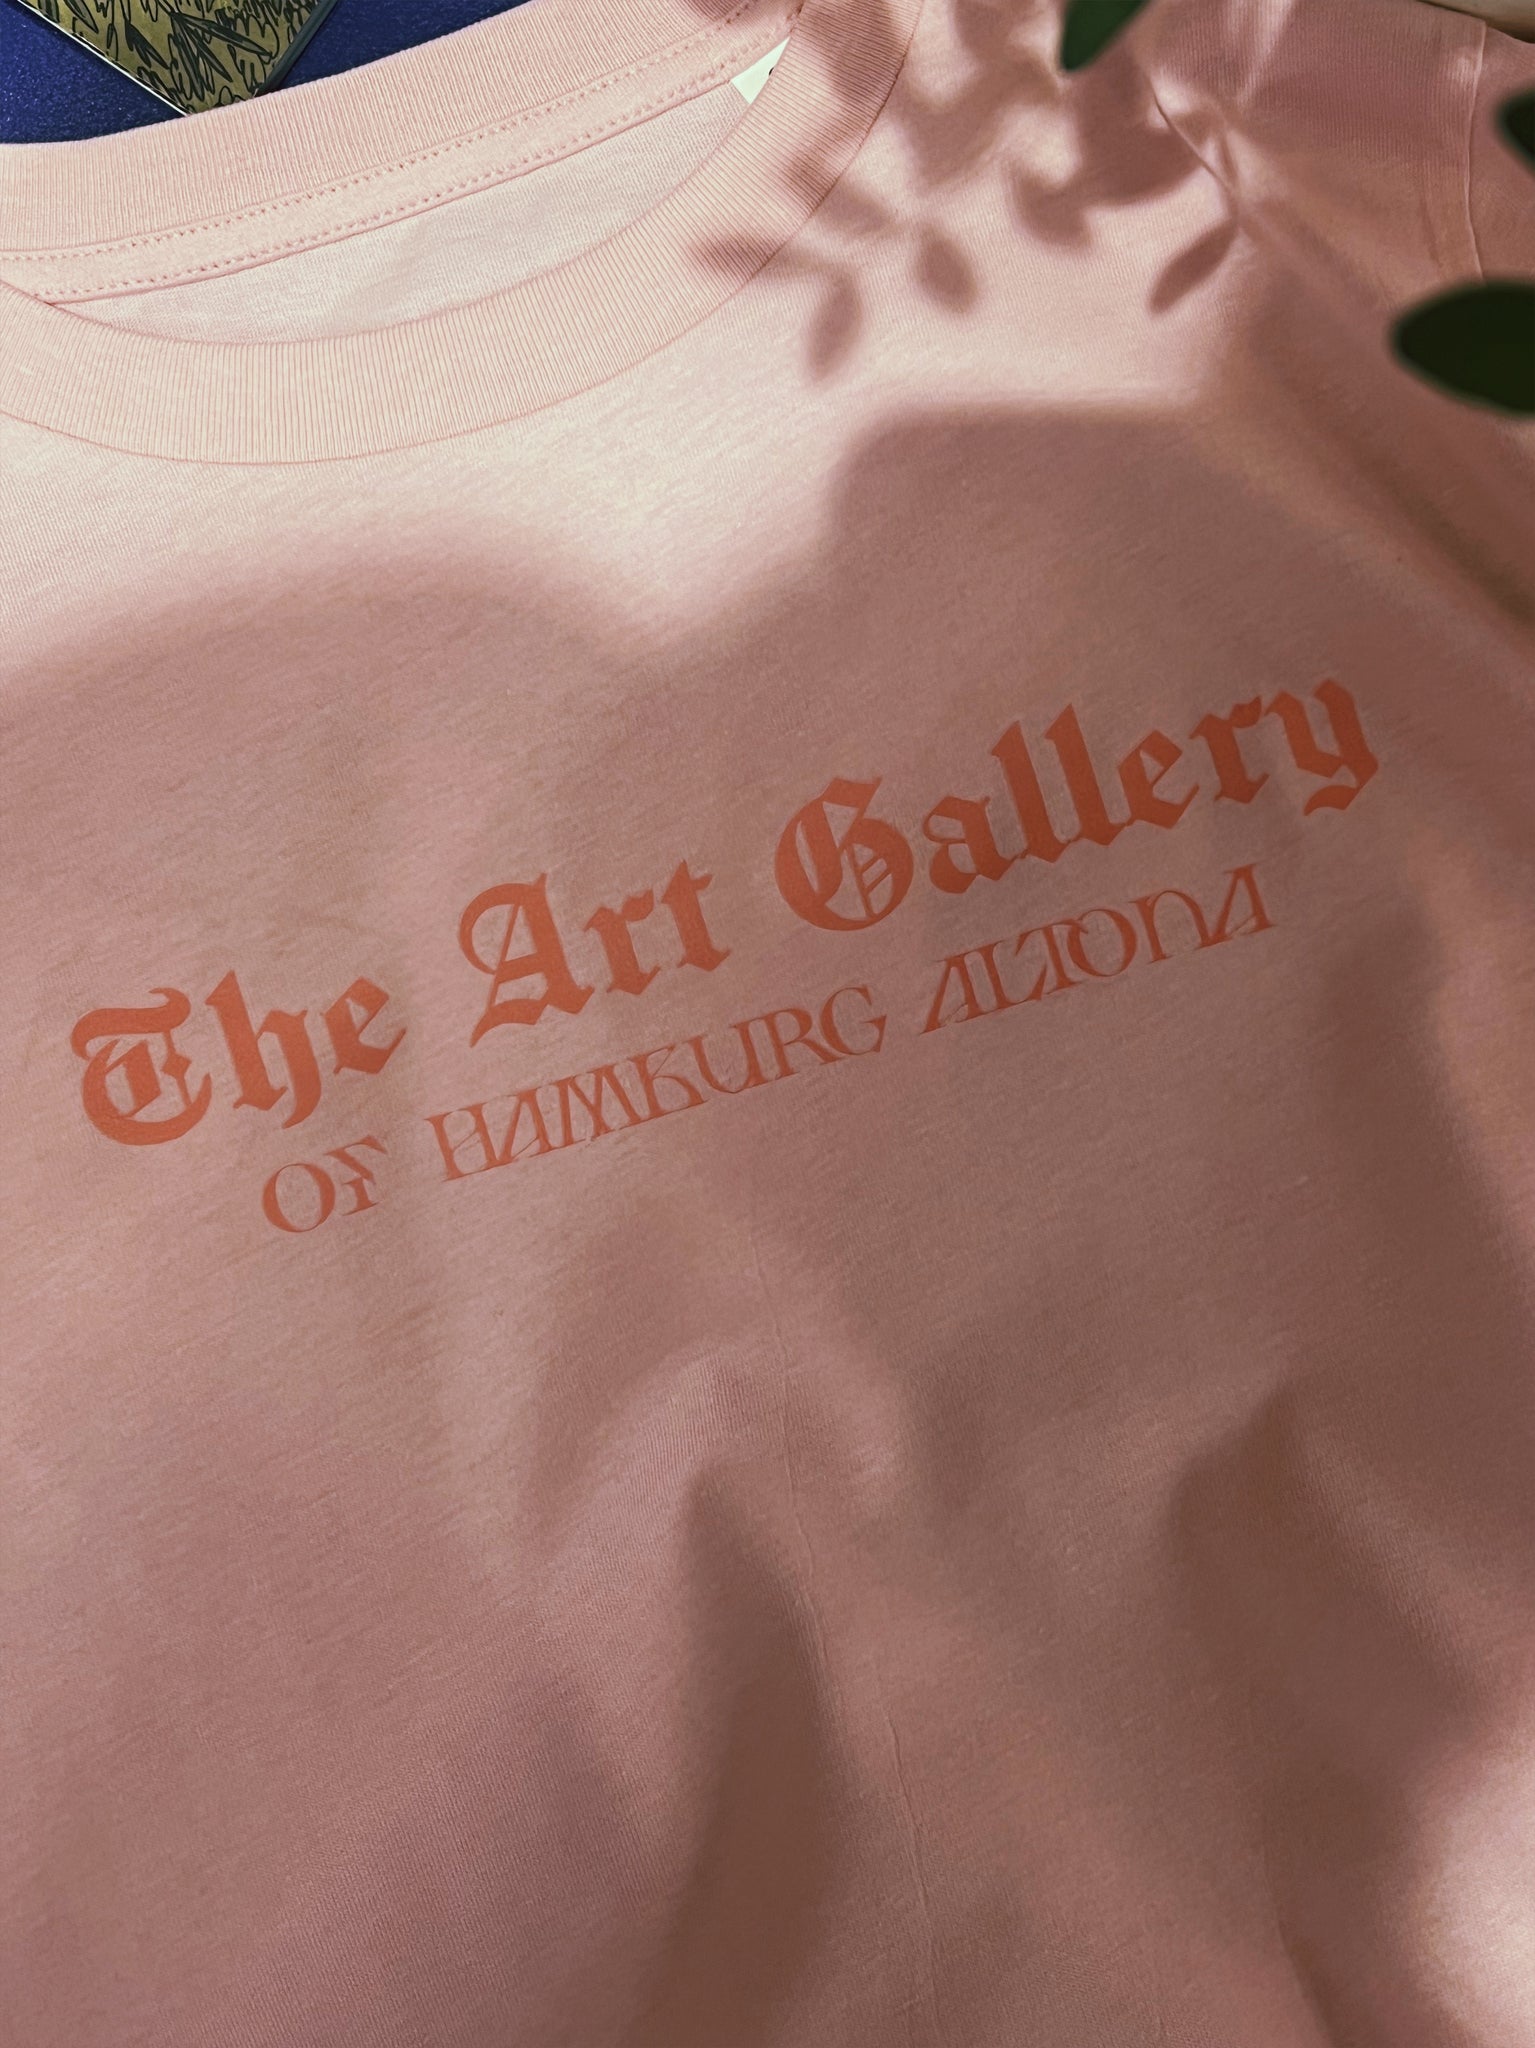 THE ART GALLERY ROSA Shirt by KUGU Studio